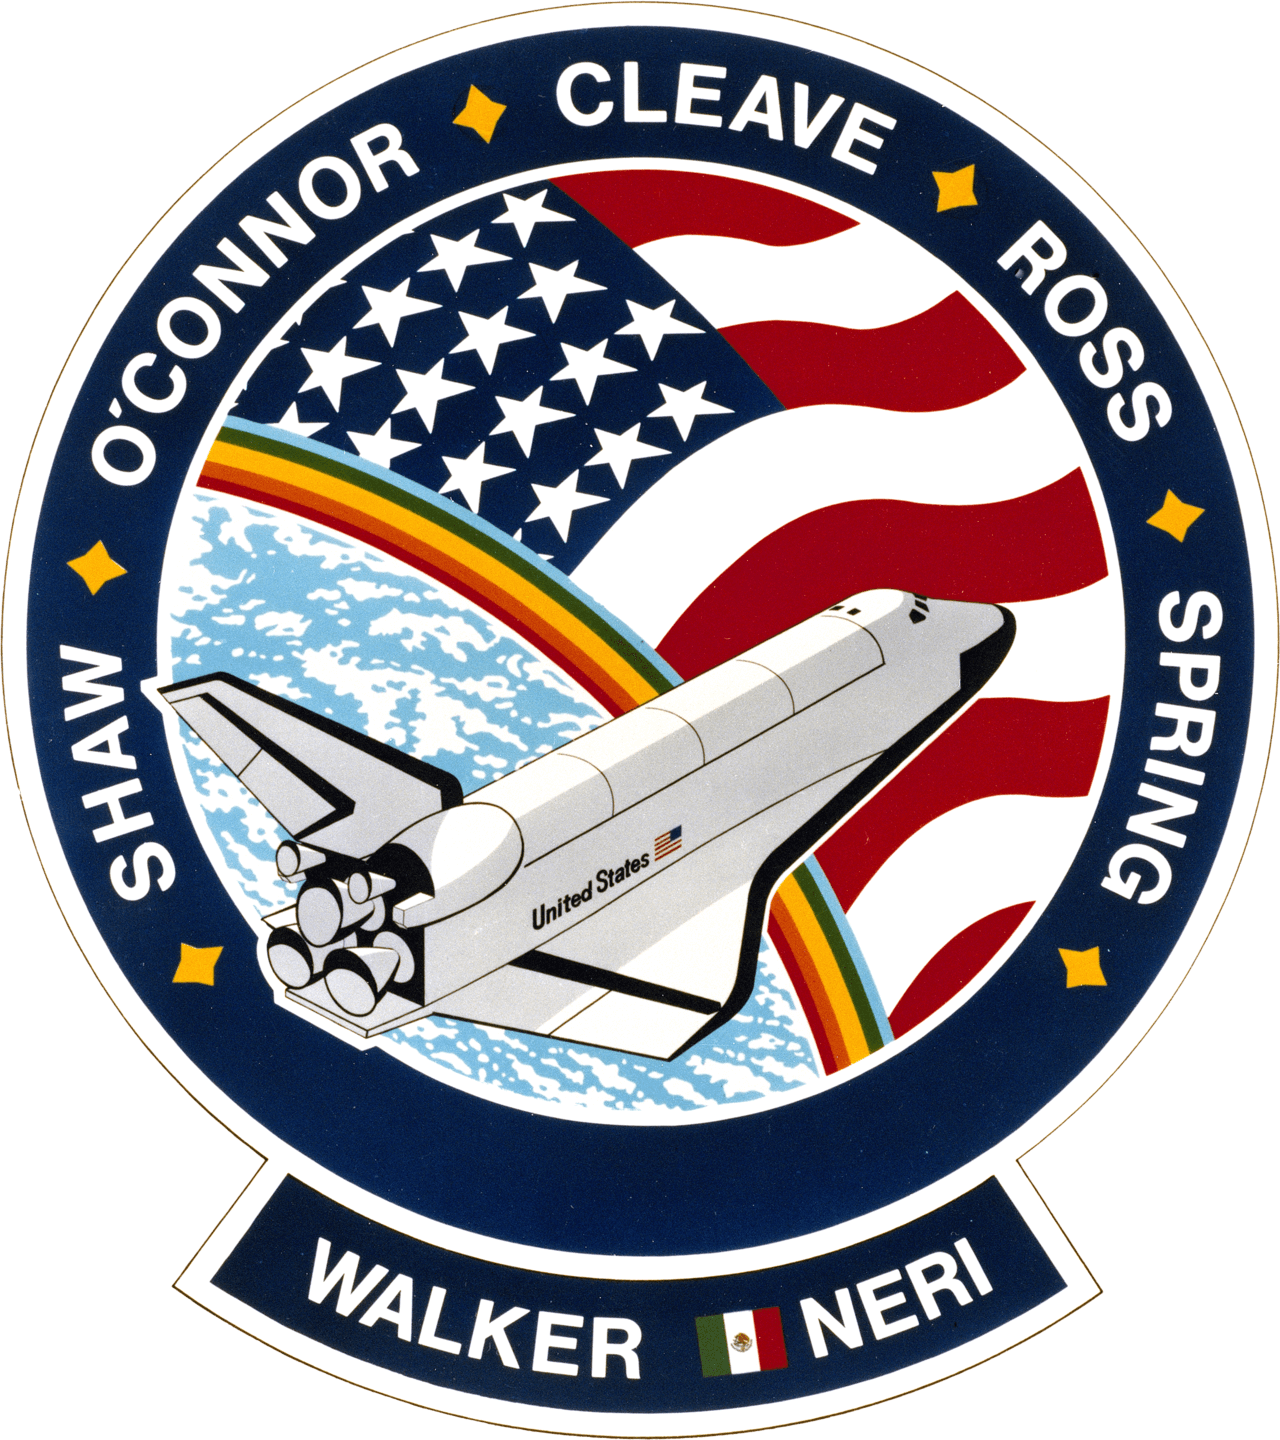 STS-61-B